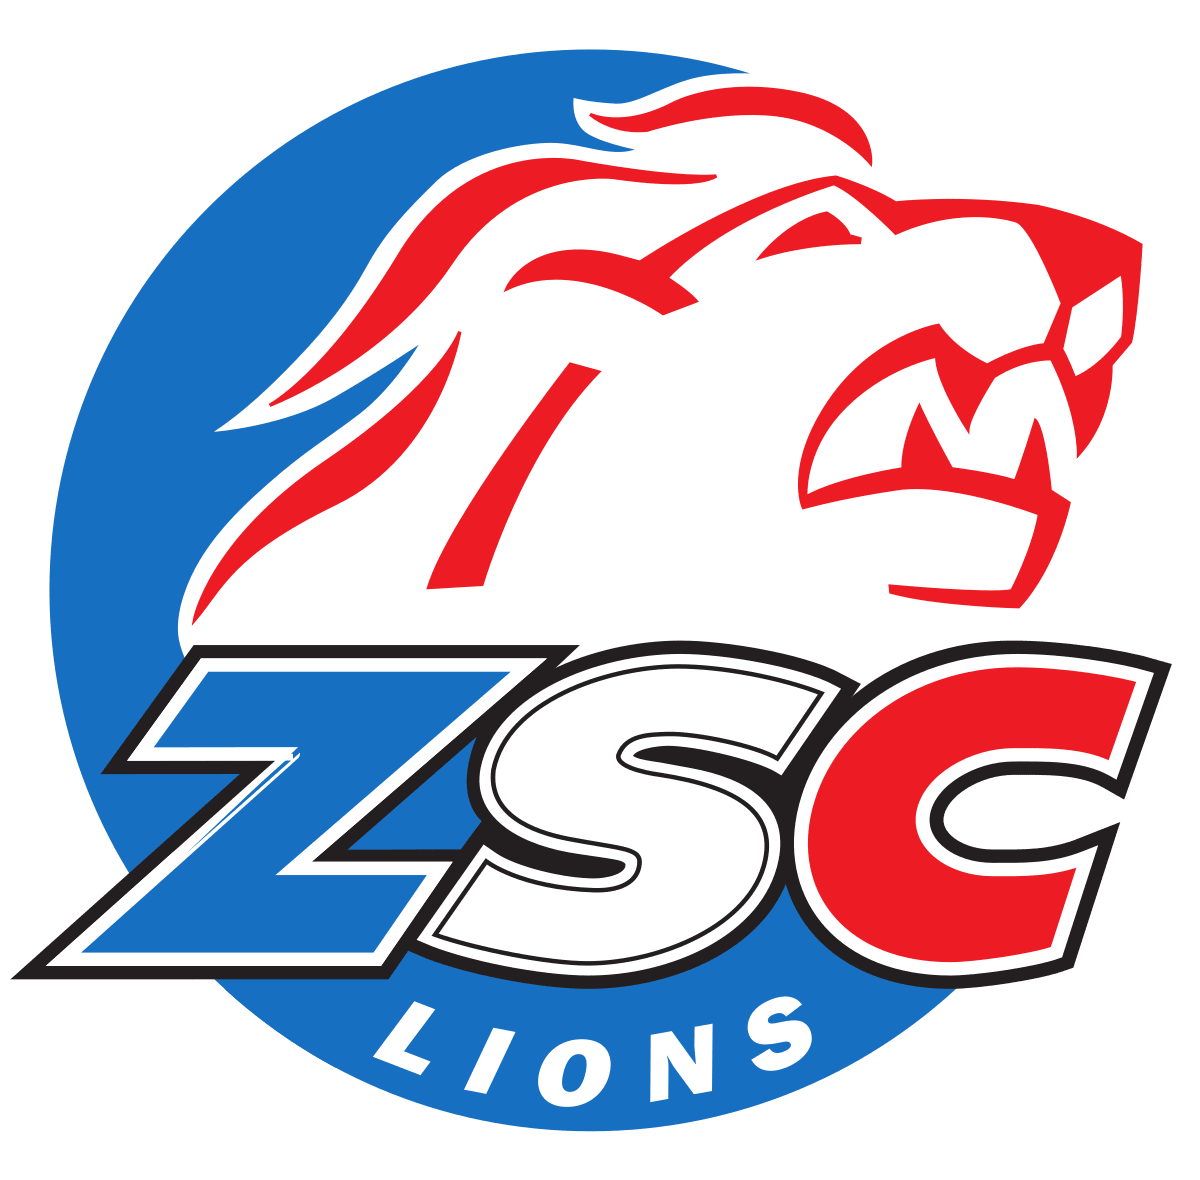 ZSC Lions logo